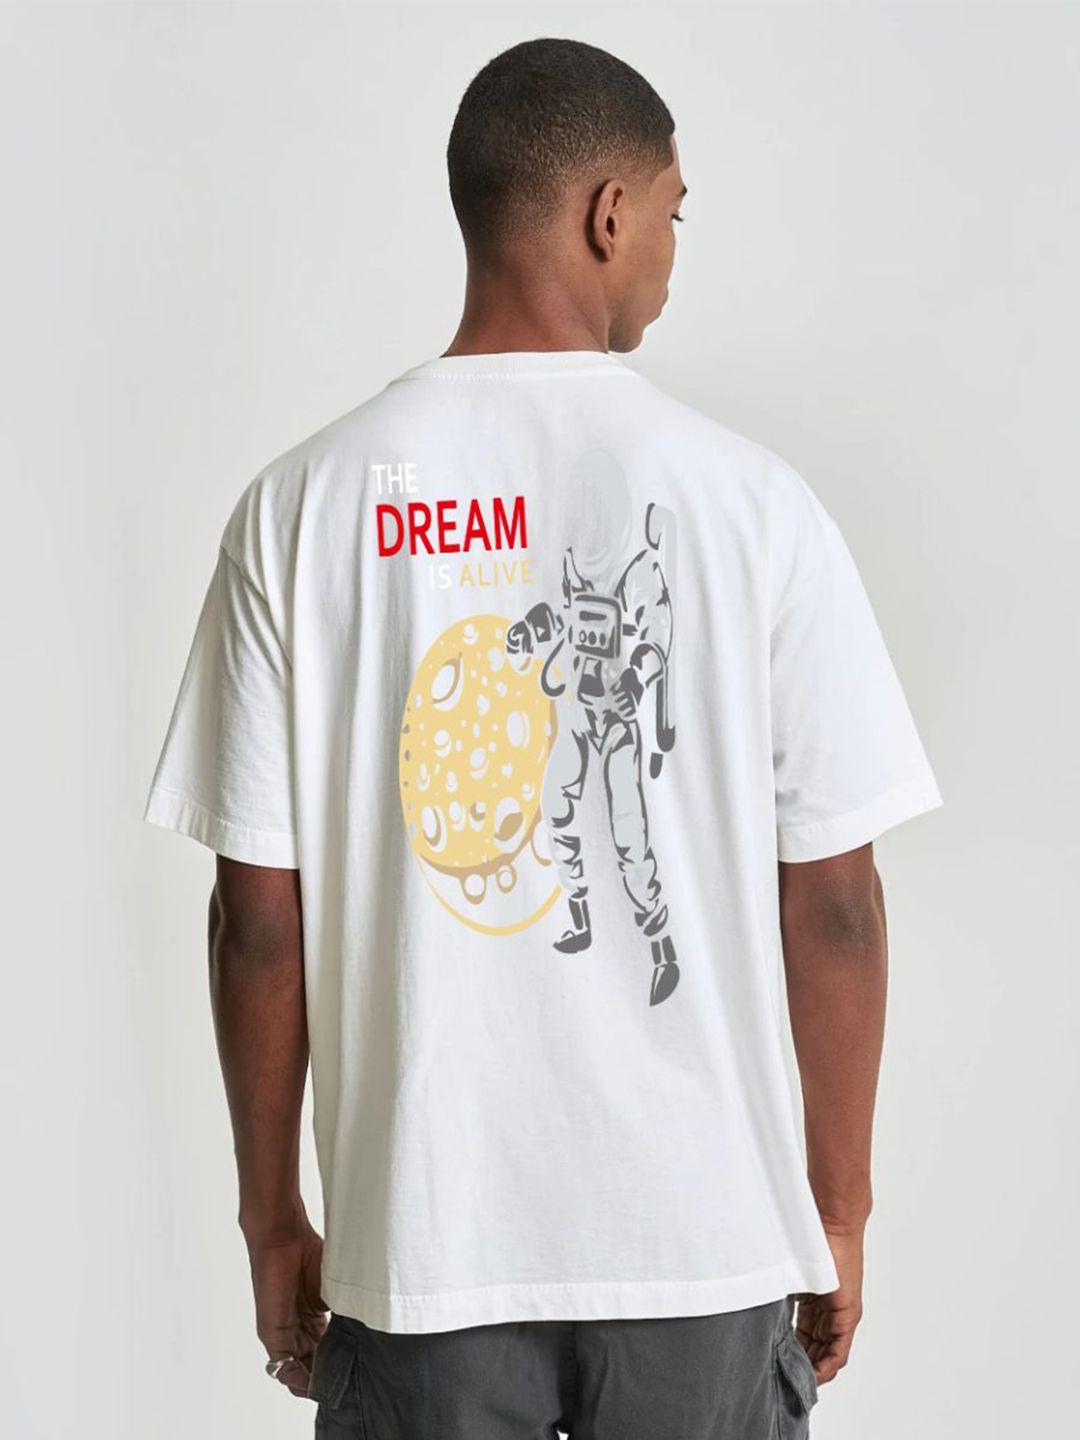 imsa moda graphic printed cotton t-shirt